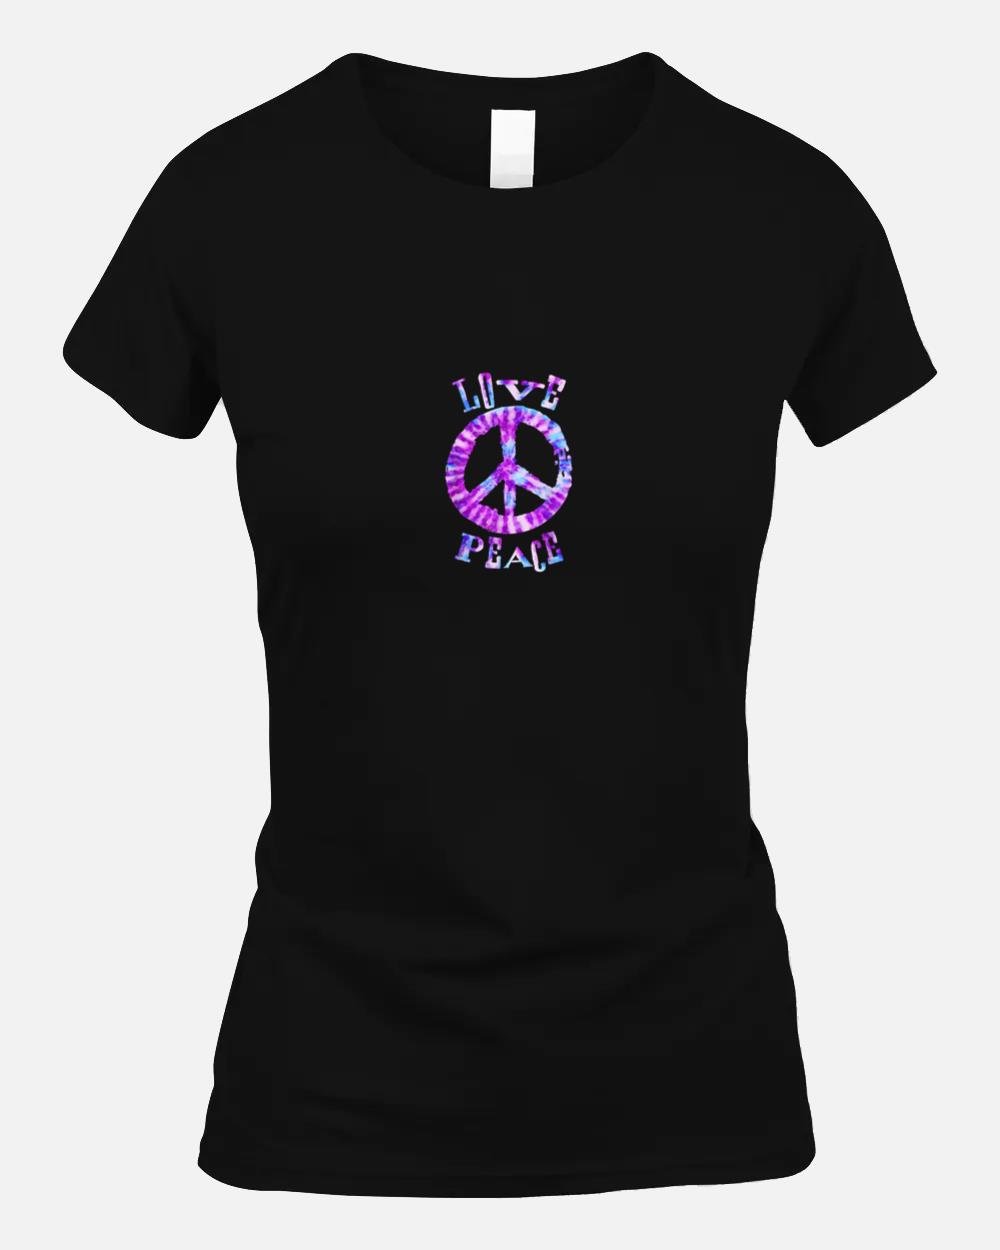 PEACE SIGN shirt LOVE TShirt 60s 70s Tie Die Costume Unisex T-Shirt